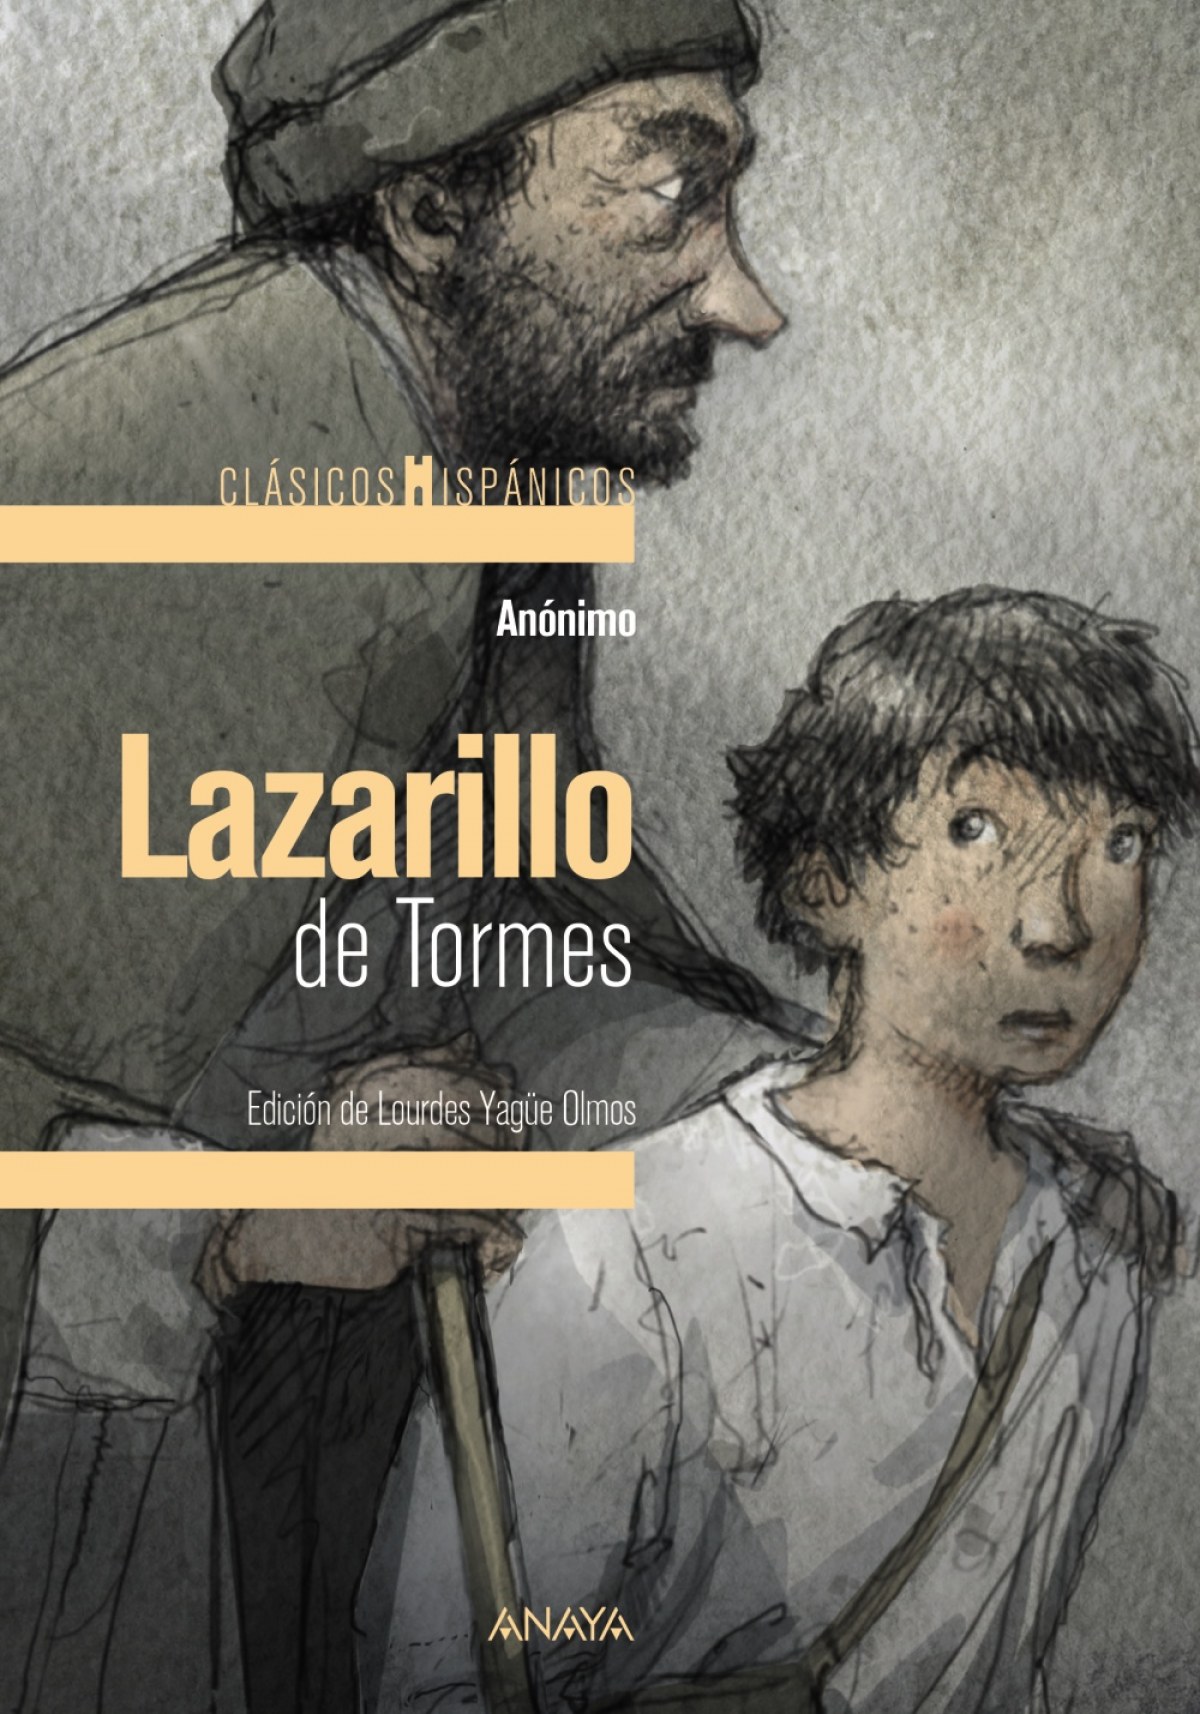 Lazarillo de tormes - ANÓNIMO